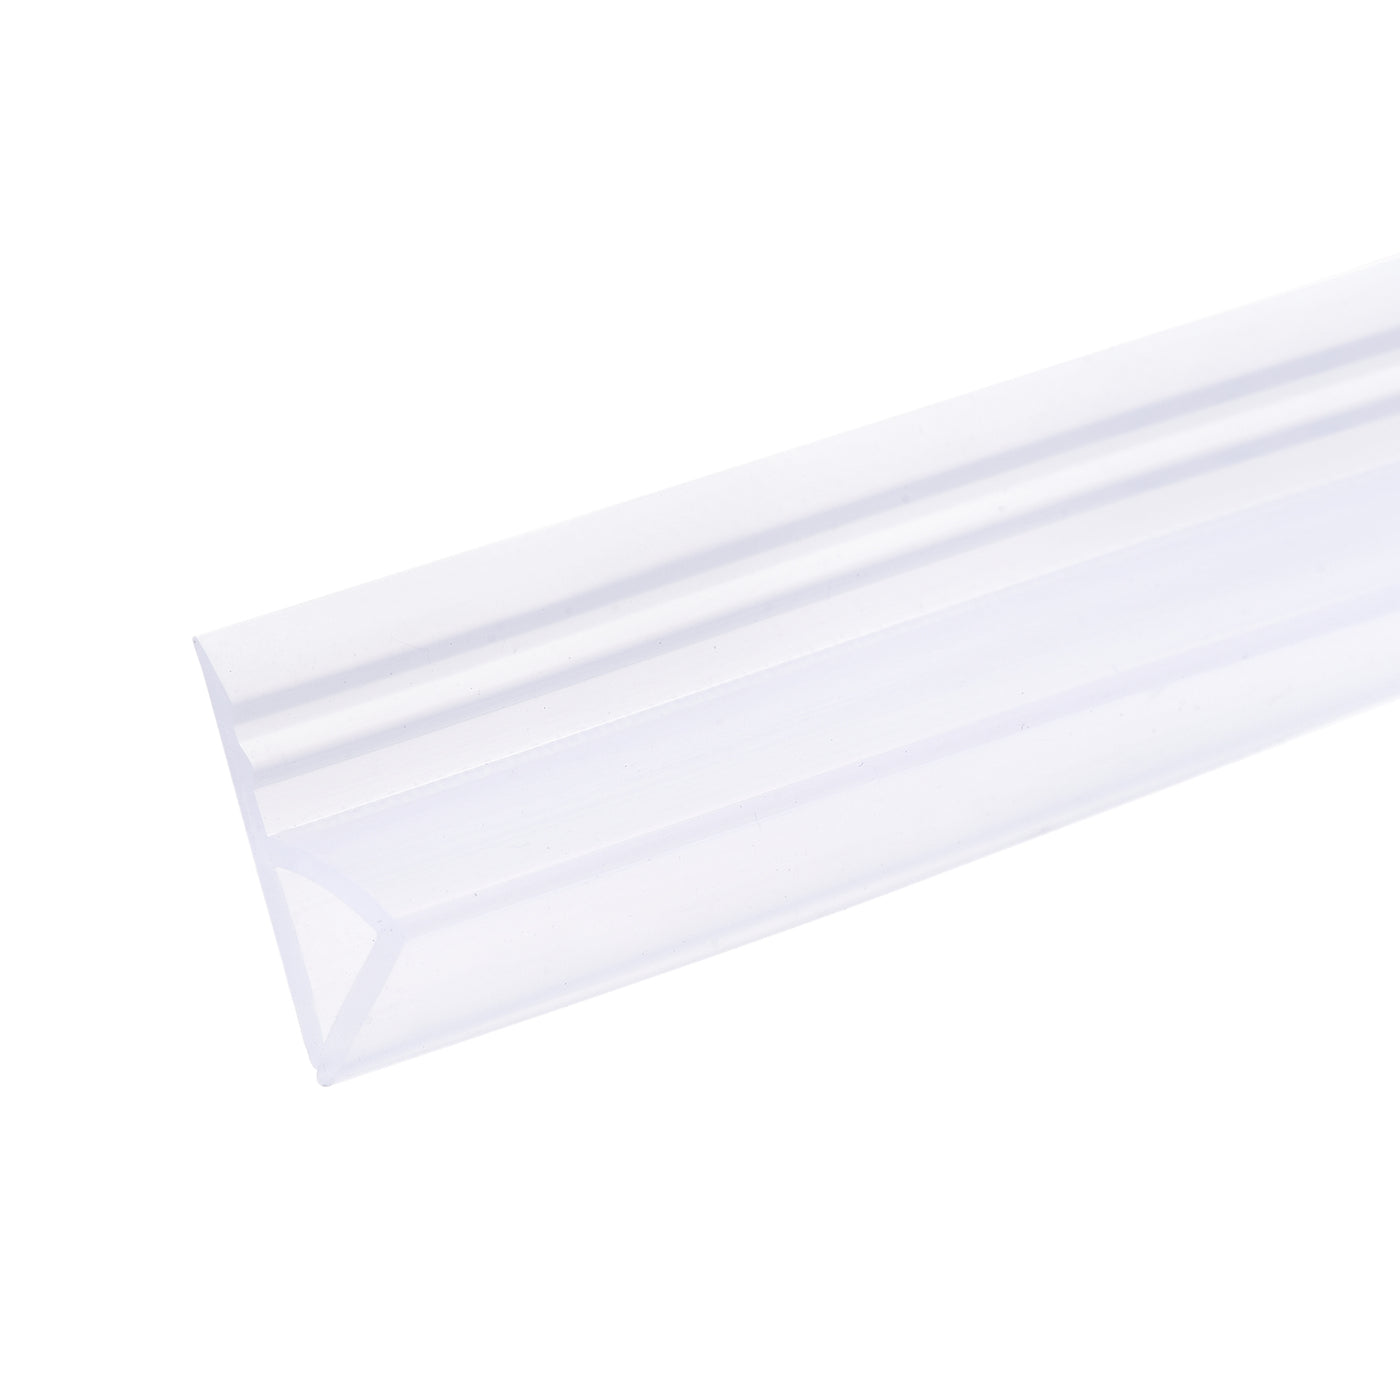 Uxcell Uxcell Frameless Glass Shower Door Sweep 137.8" for 5/16"(8mm) Glass H-Type Seal Strip